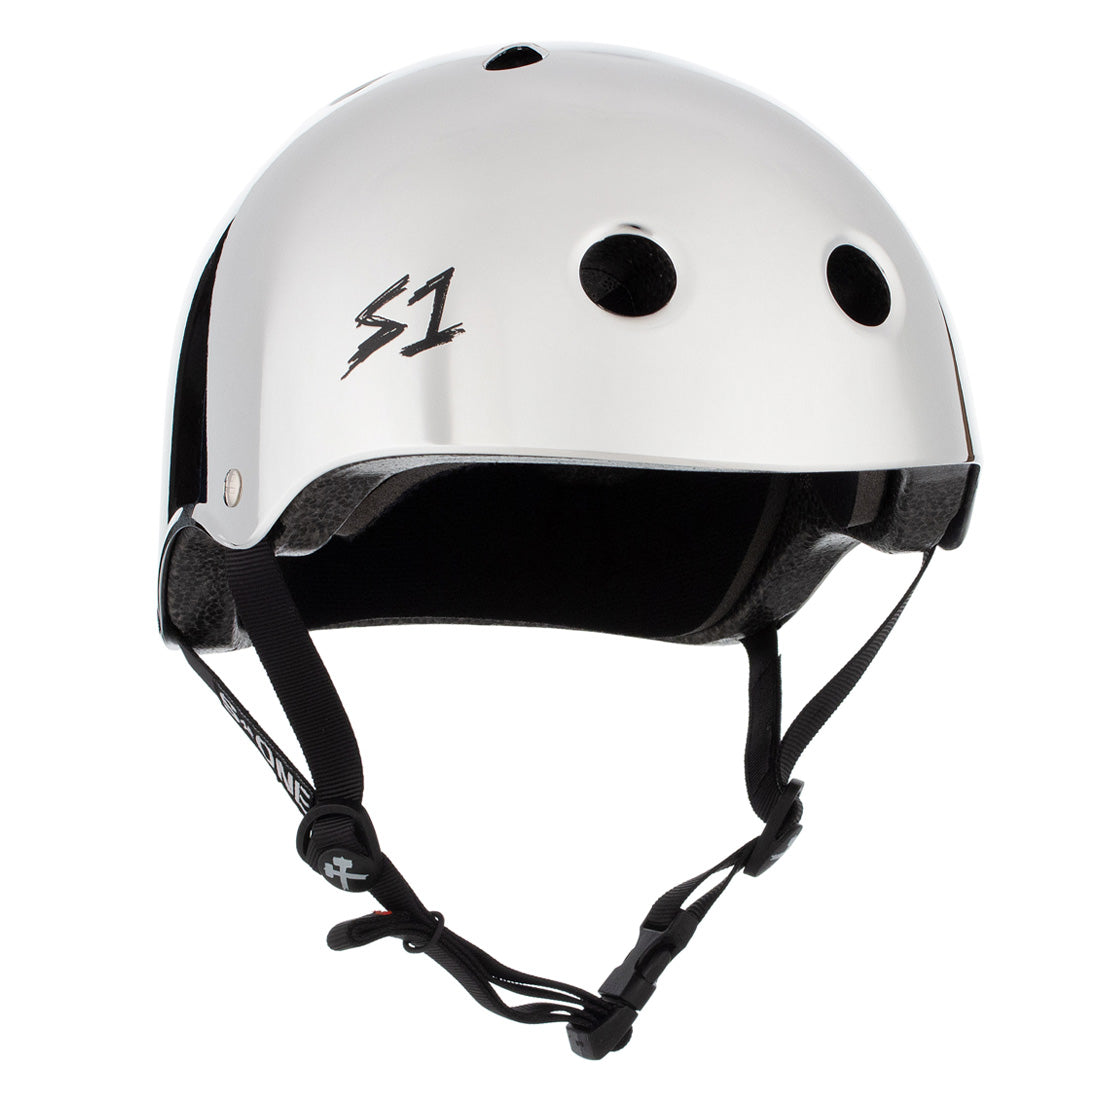 S-One Lifer Helmet - Silver Mirror Helmets